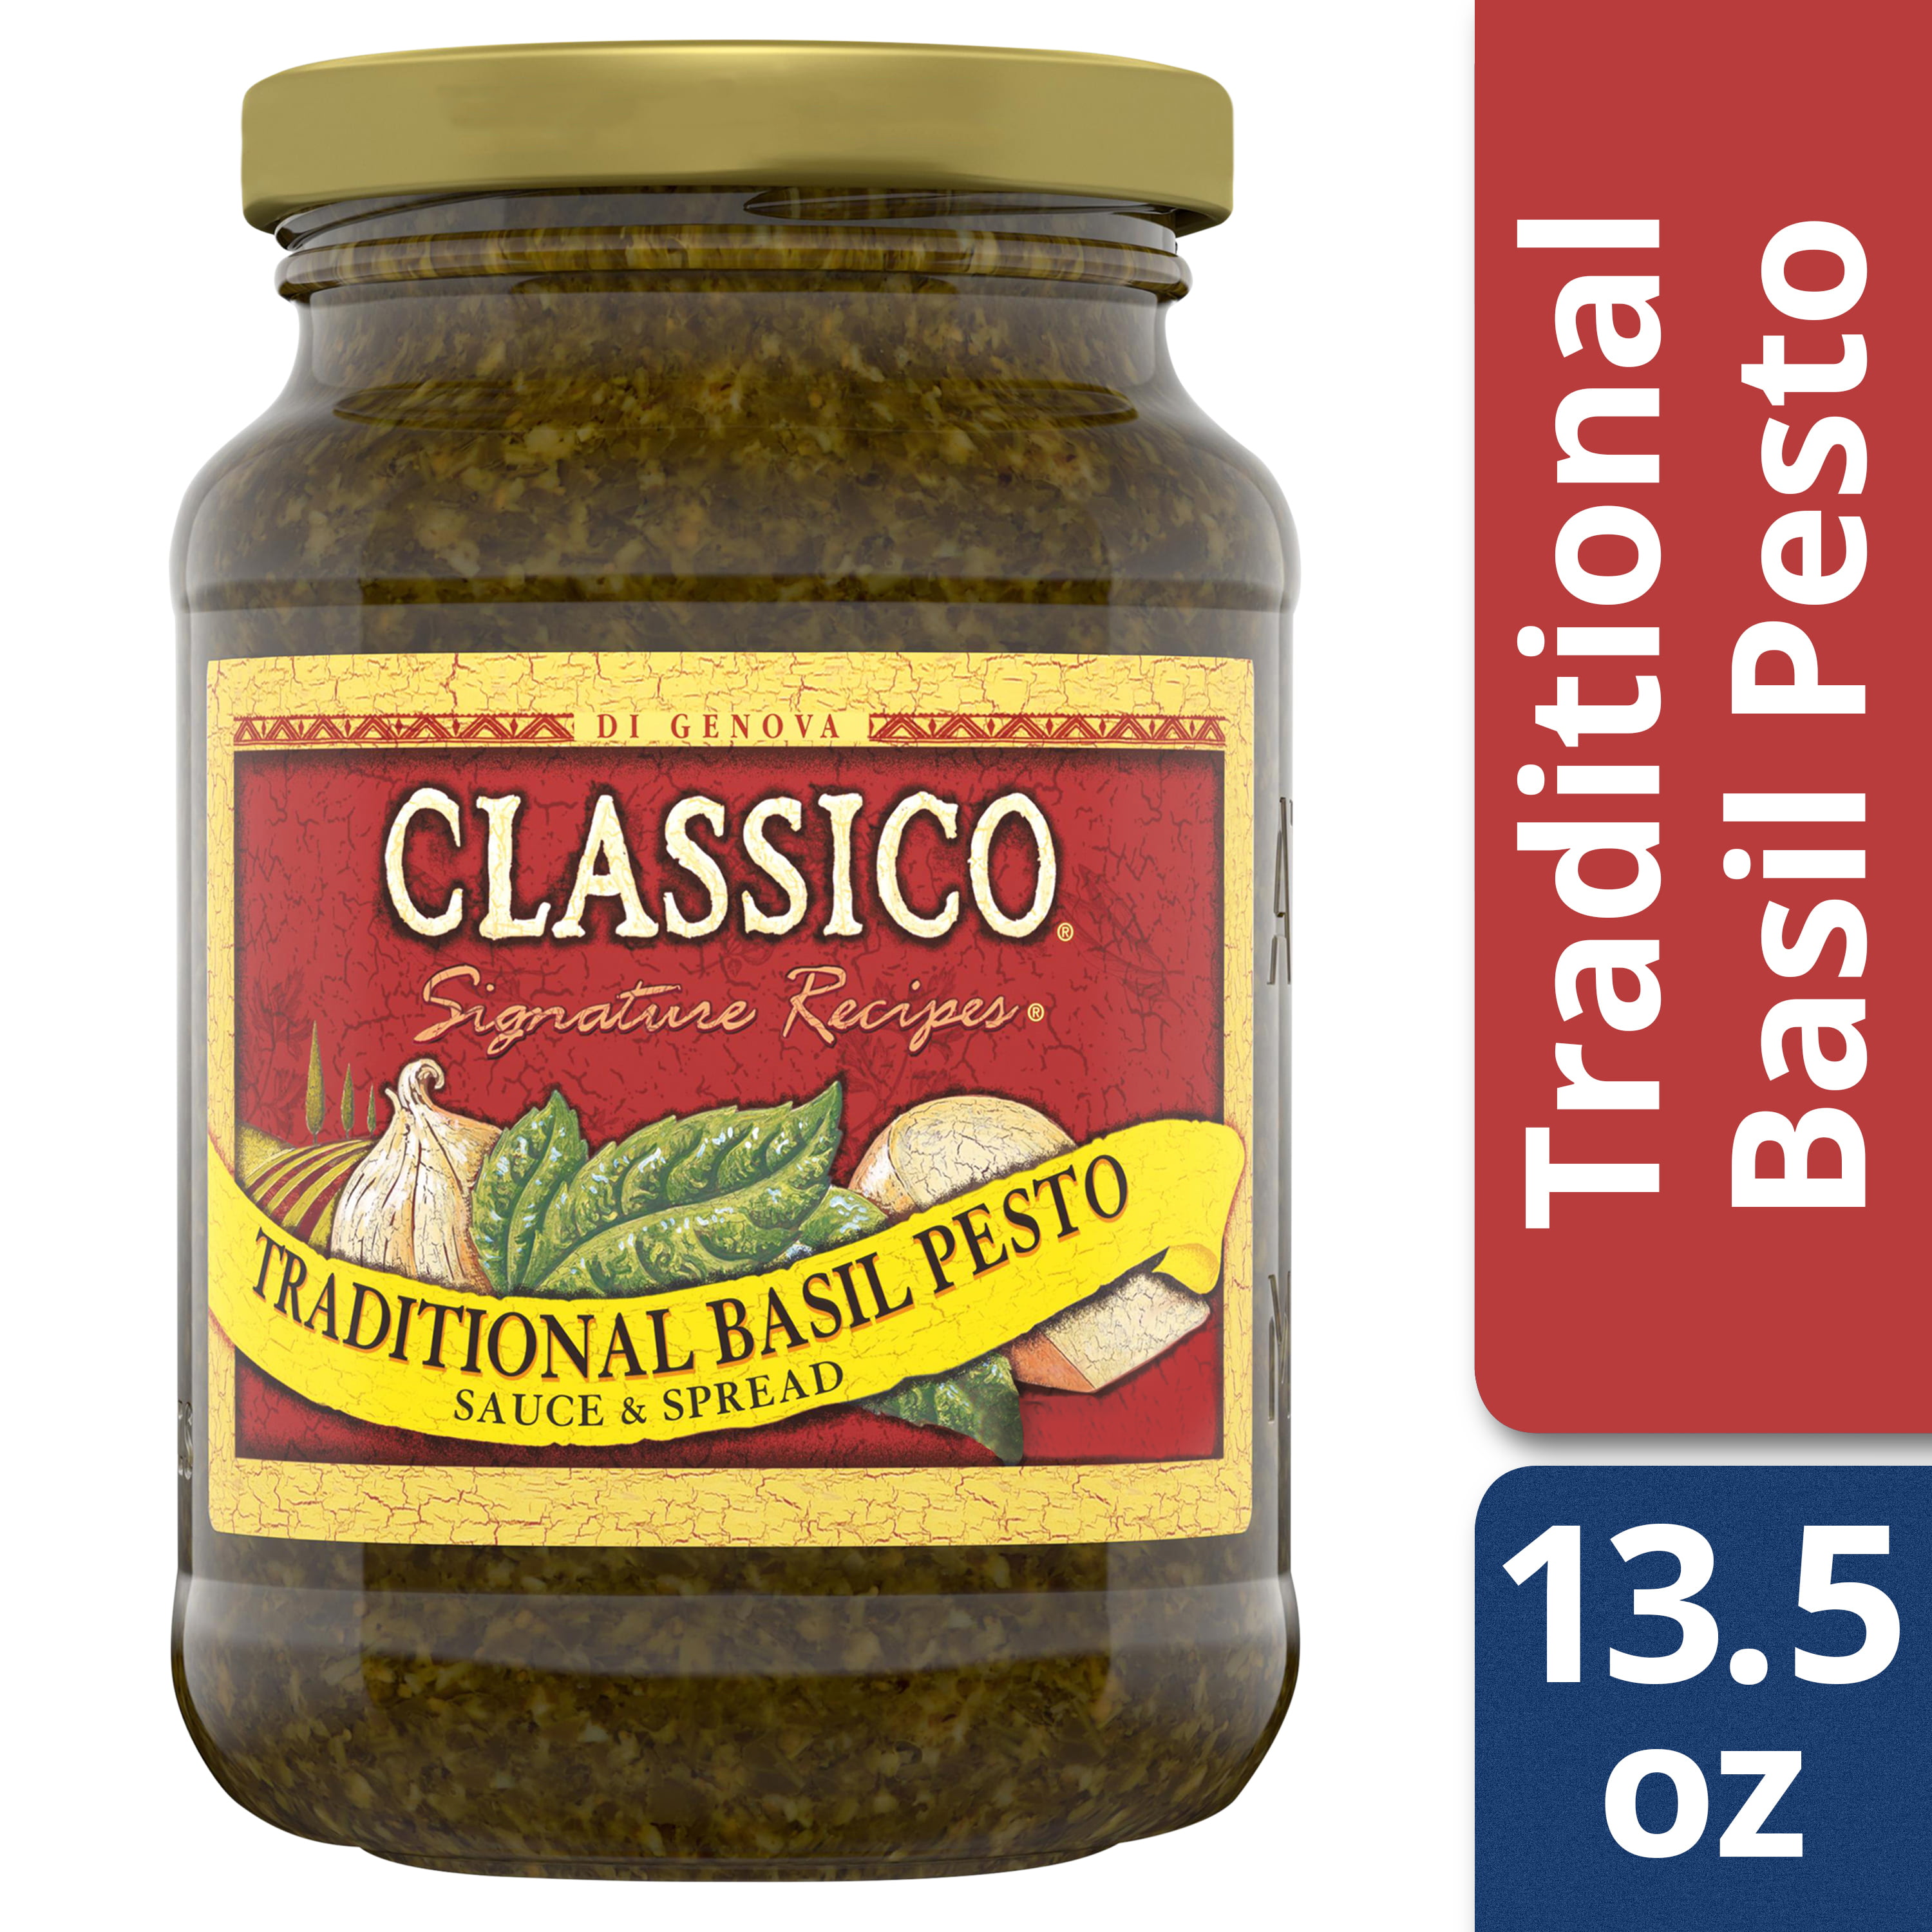 Classico Signature Recipes Traditional Basil Pesto Sauce And Spread 13 5 Oz Jar Walmart Com Walmart Com,Portable Gas Grill Bbq